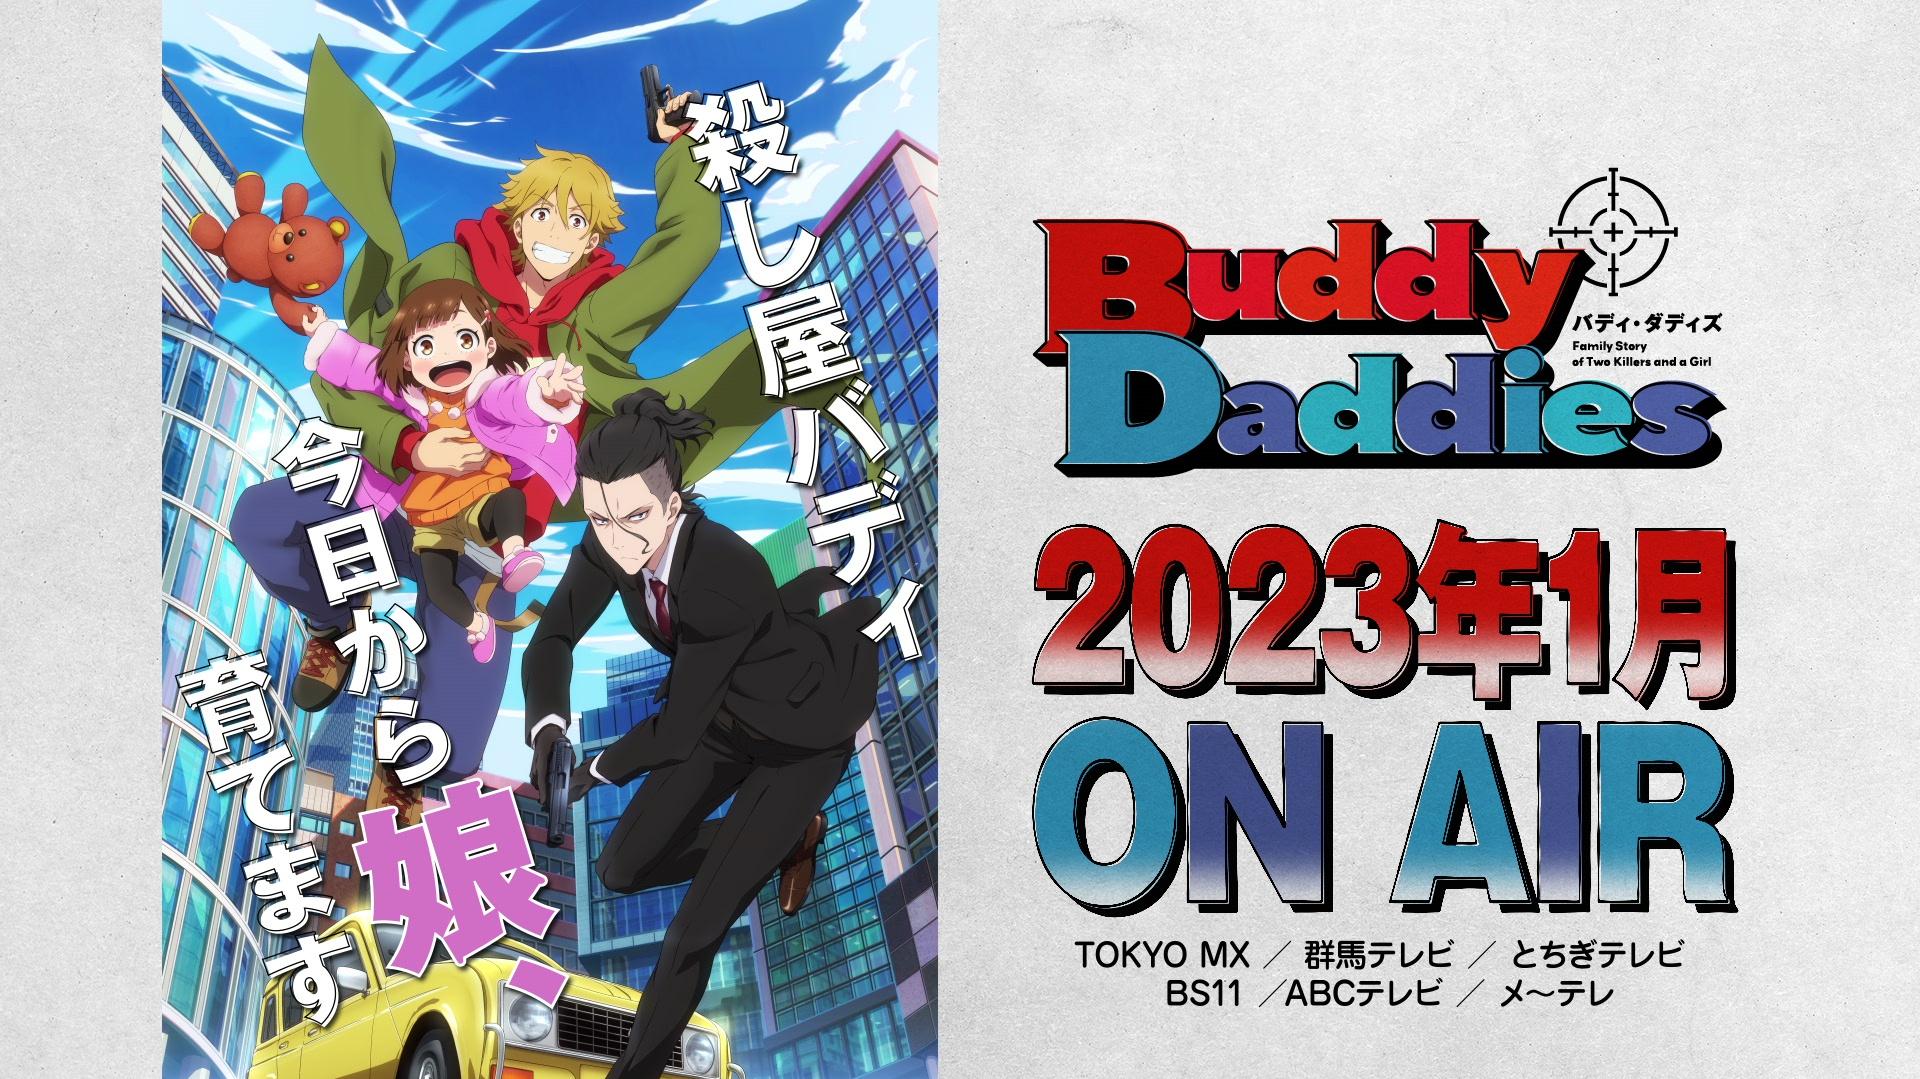 Anime Trending On Buddy Daddies Trailer The